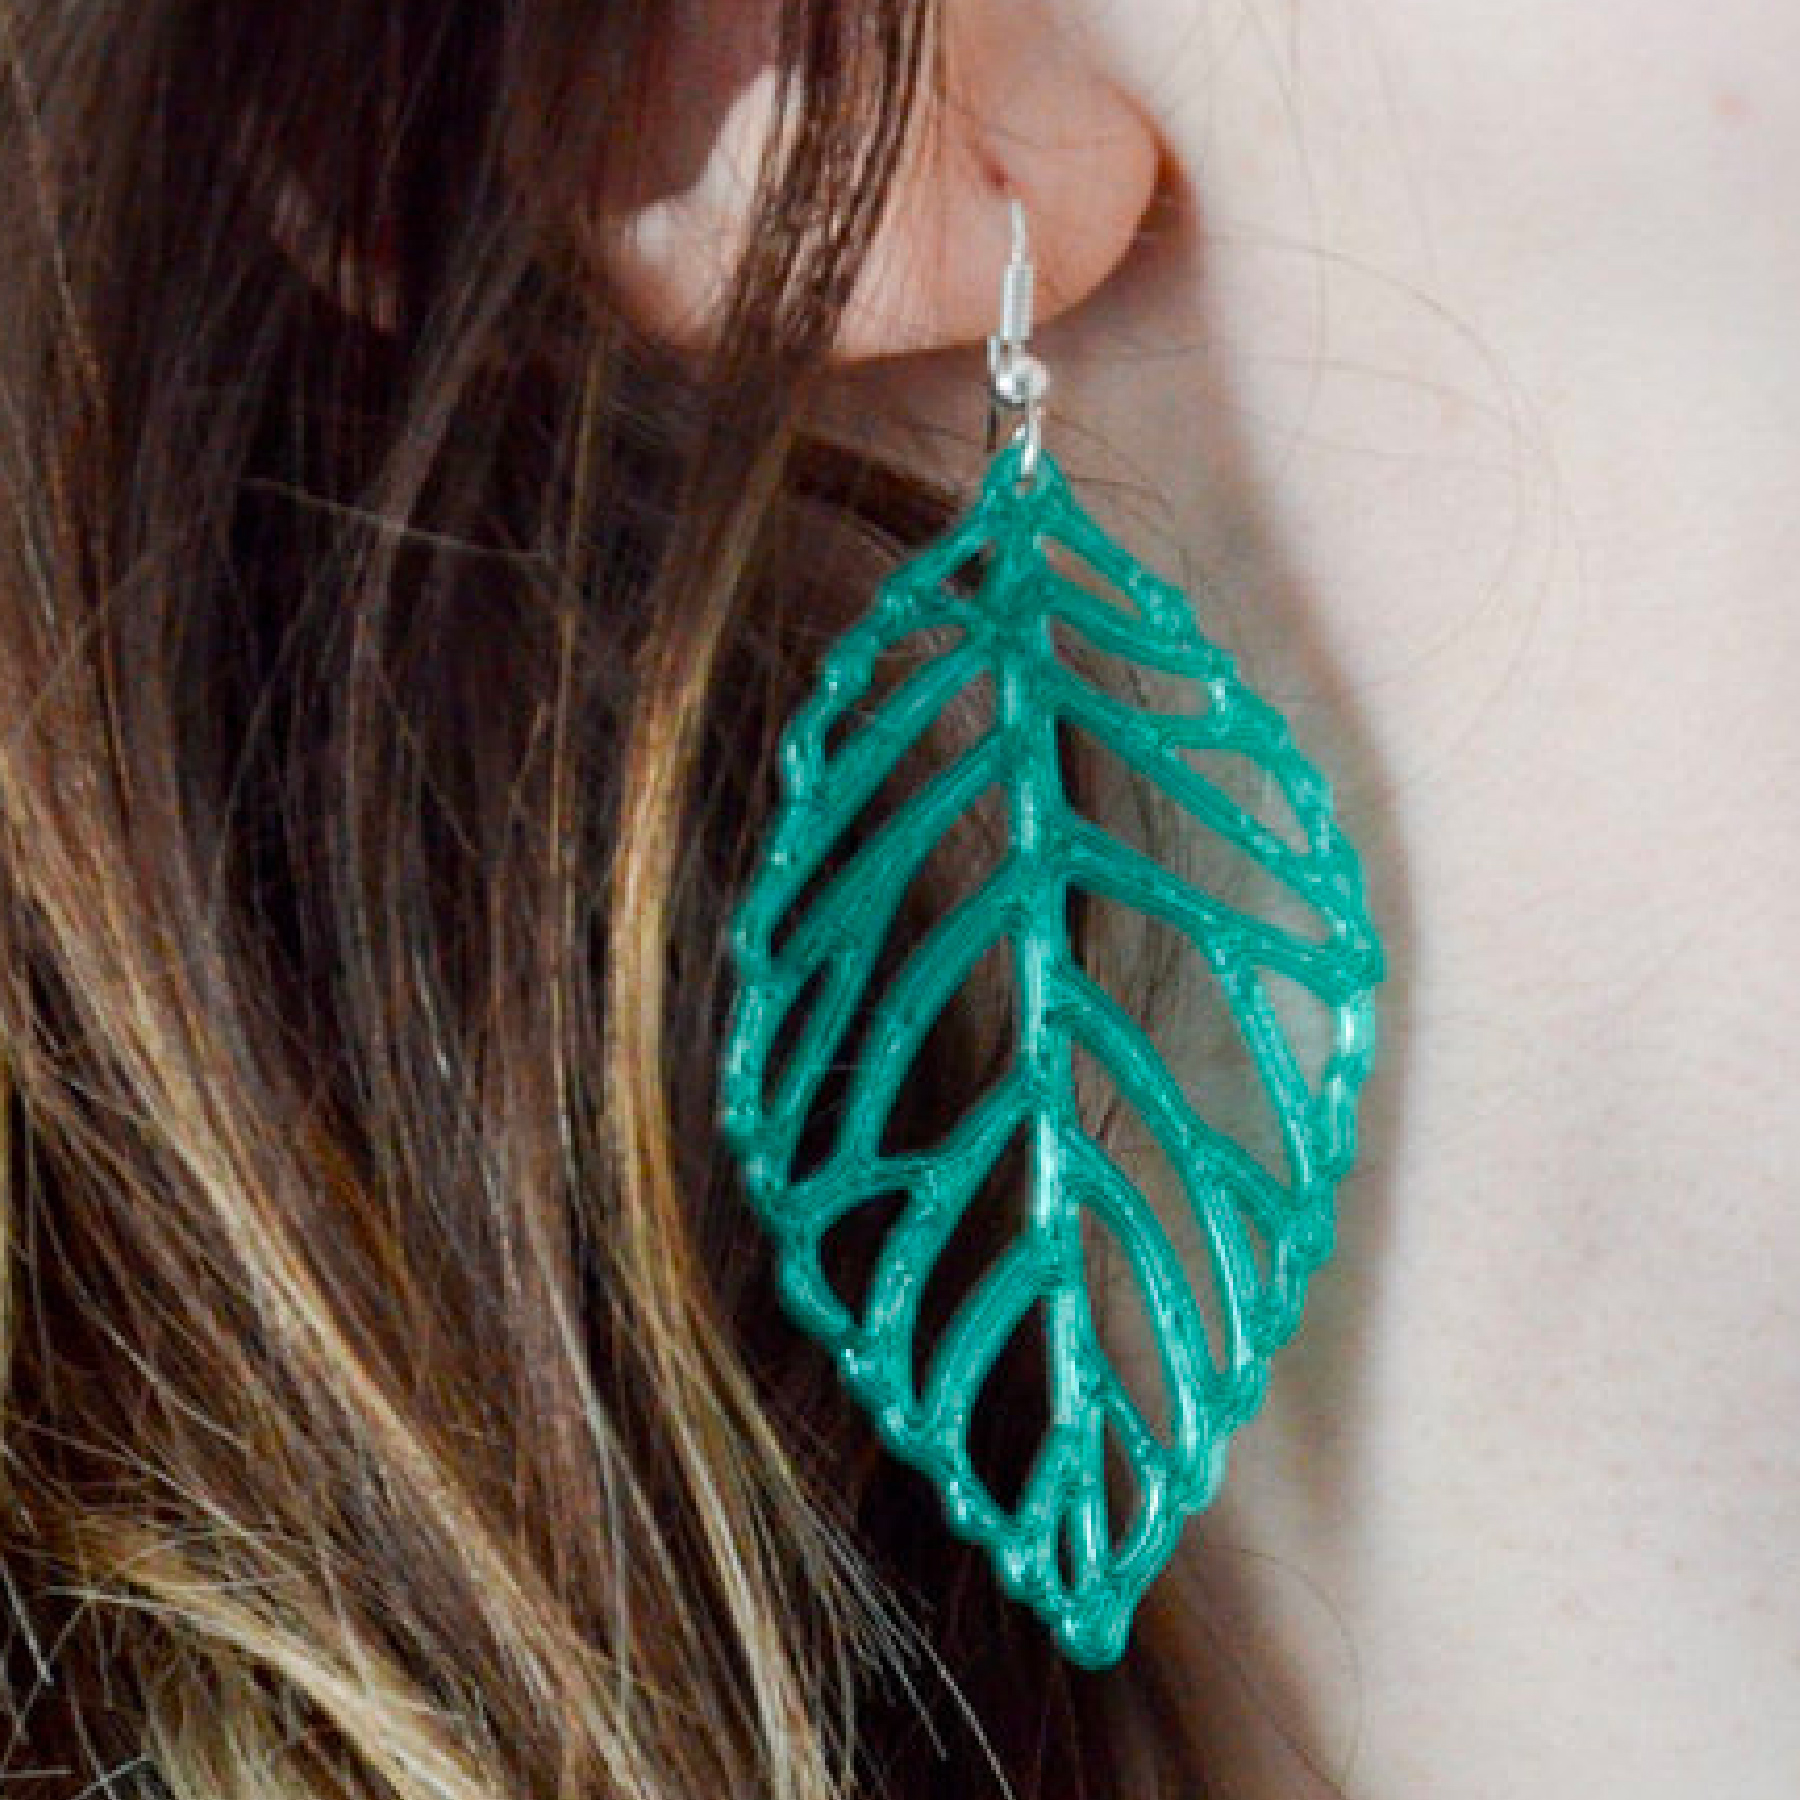 3D printed leaf earring